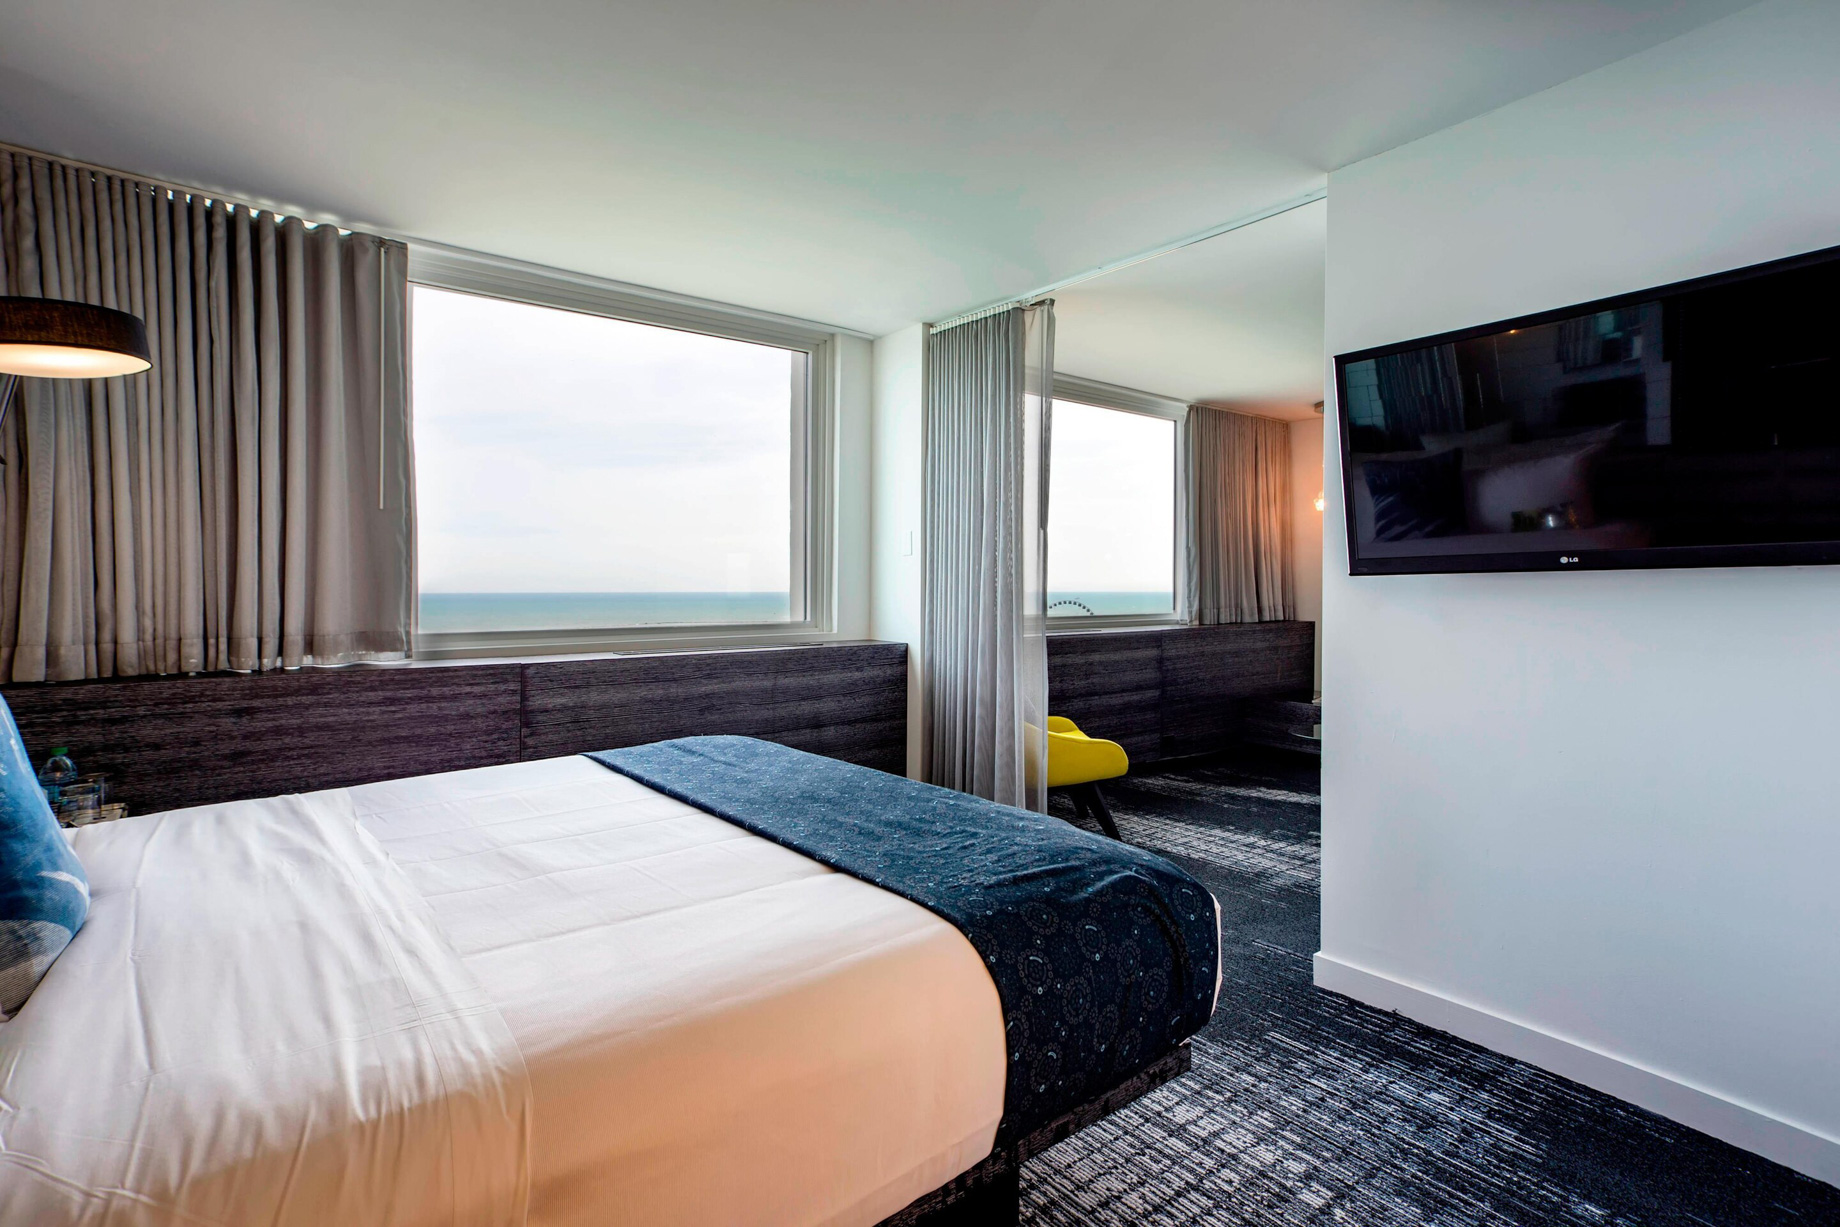 W Chicago Lakeshore Hotel – Chicago, IL, USA – Marvelous Suite Bedroom Decor